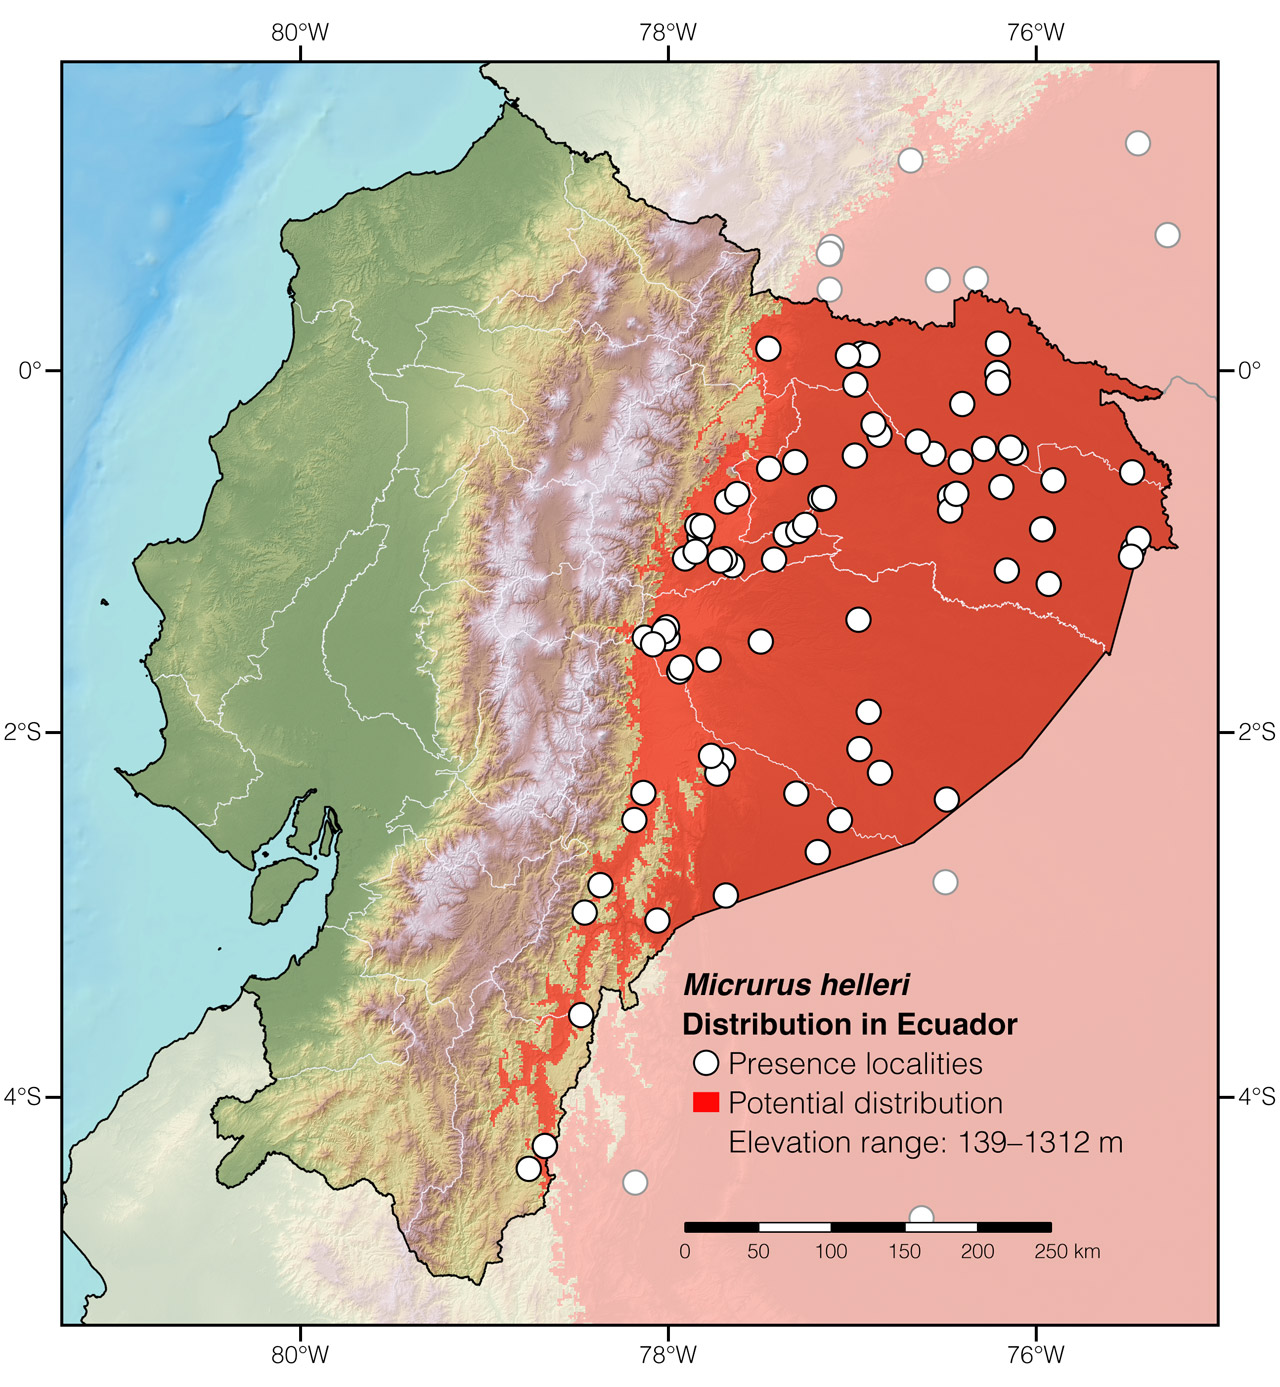 Distribution of Micrurus helleri in Ecuador